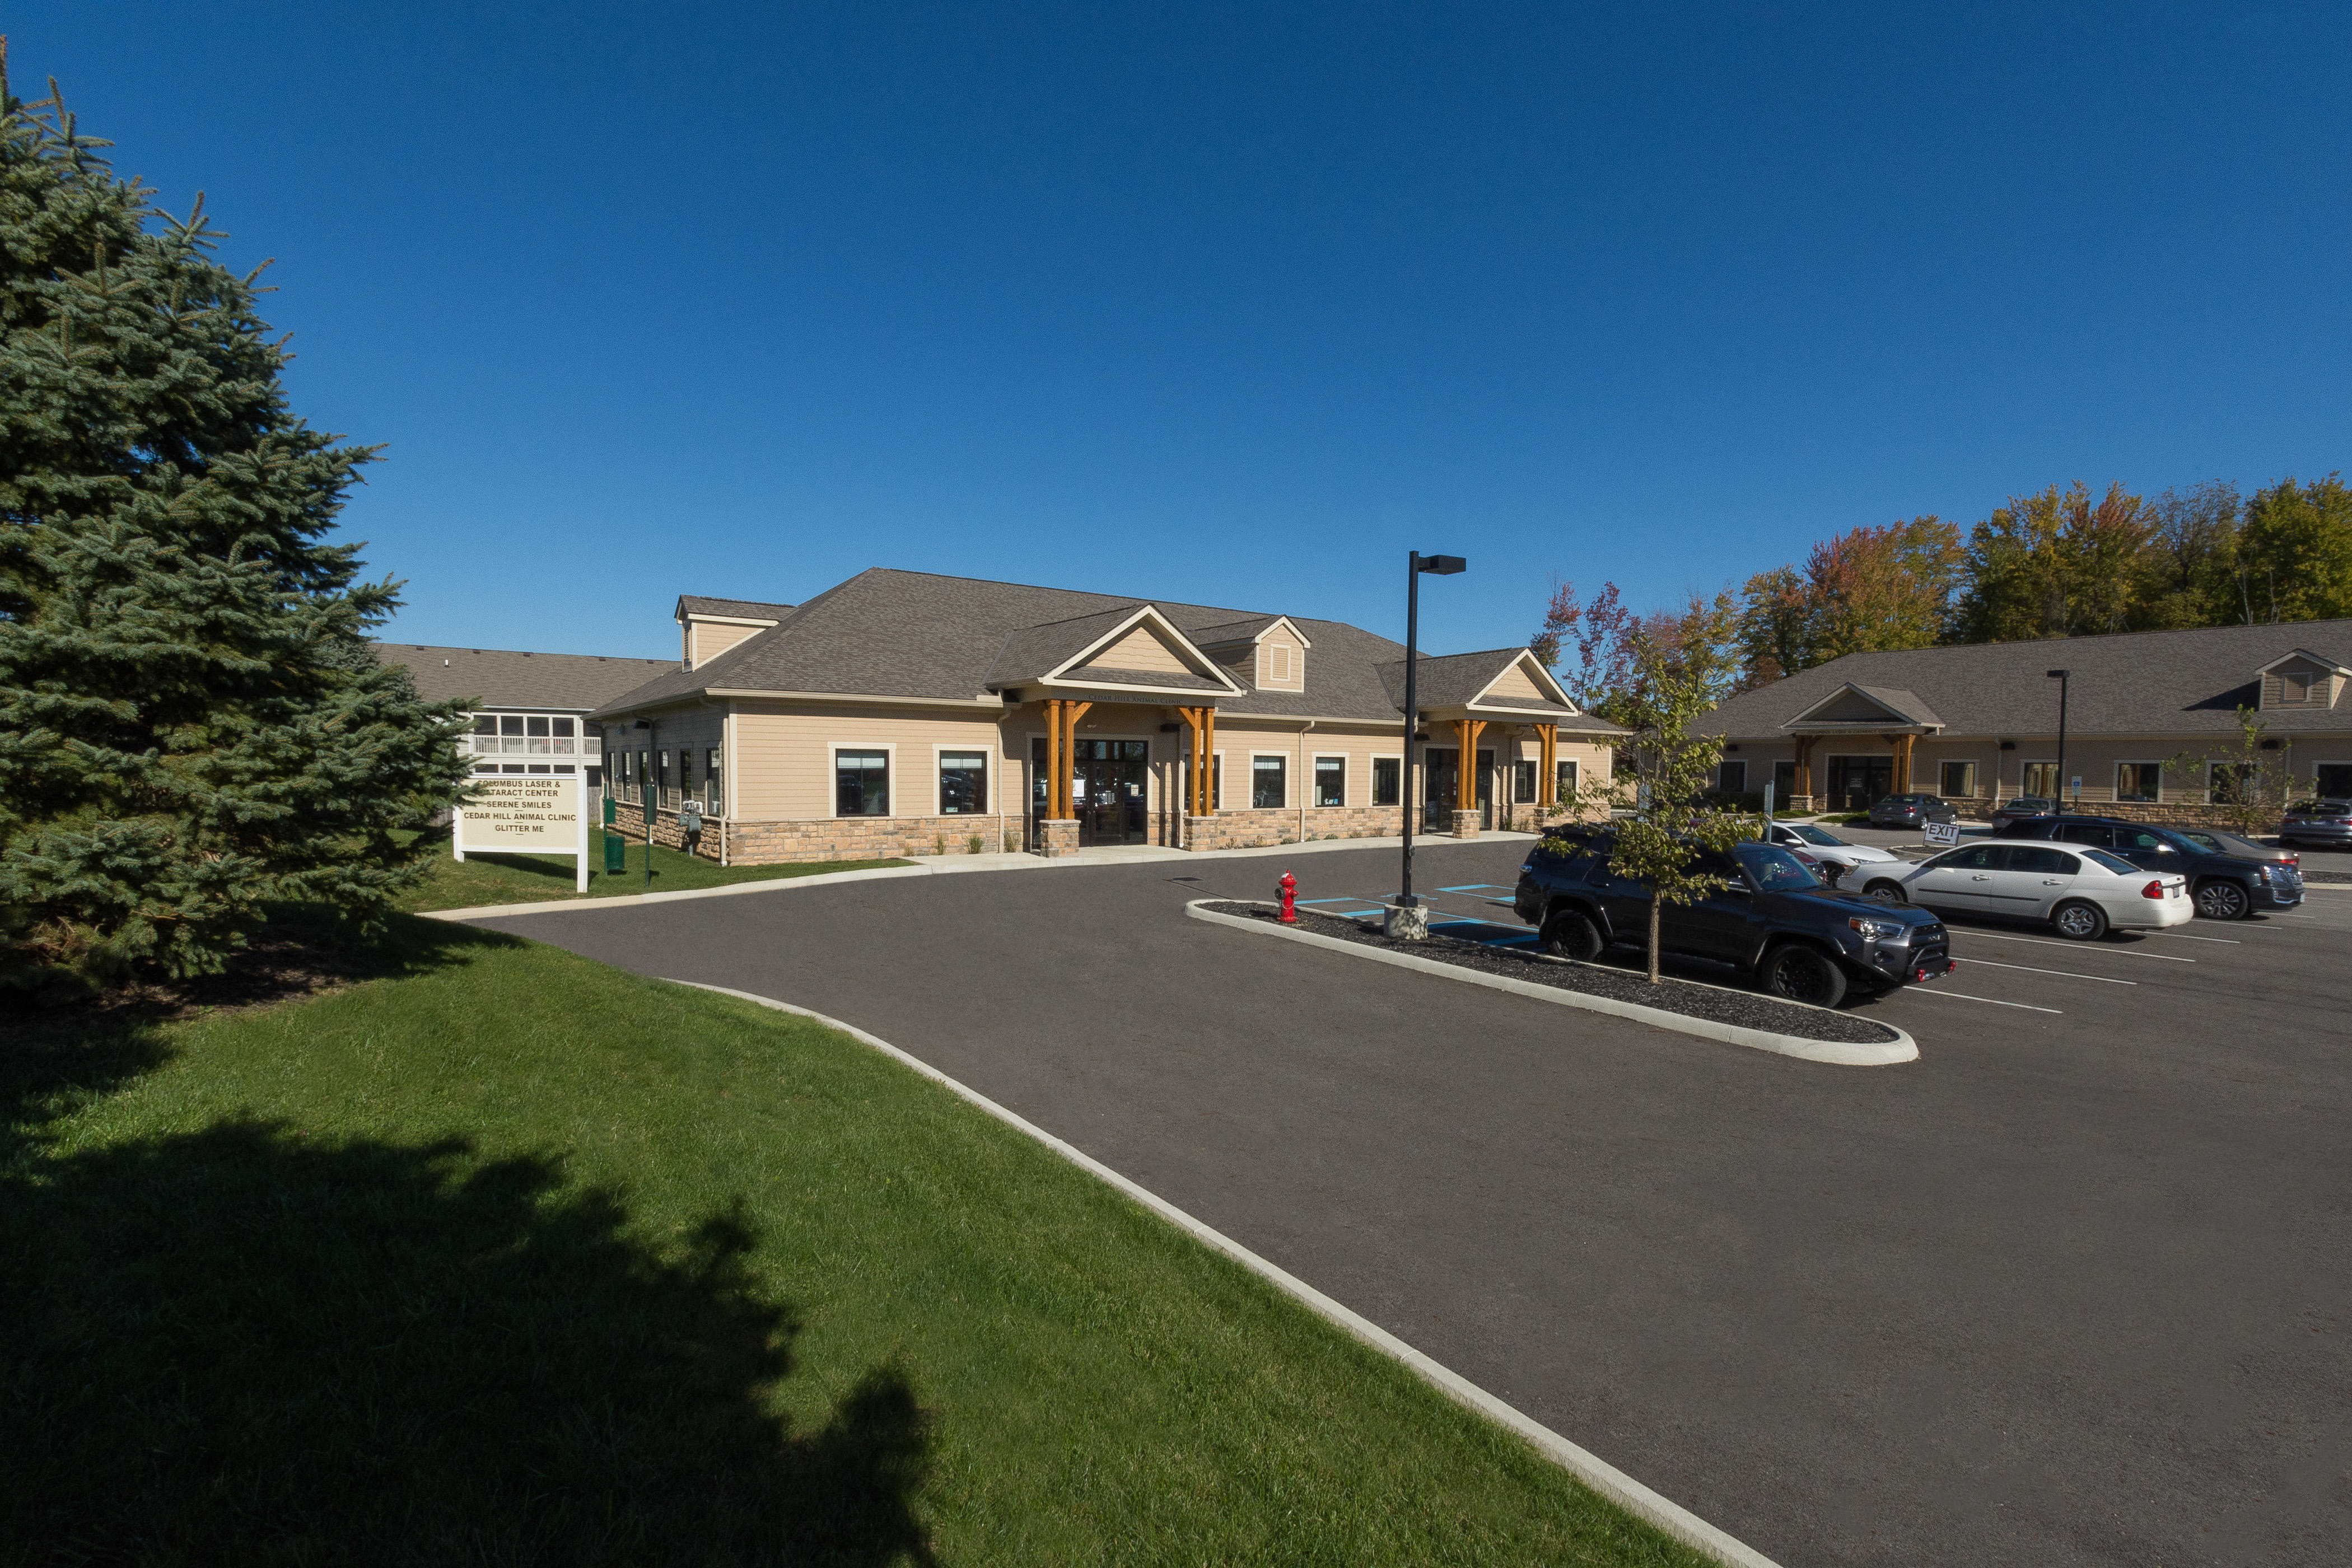 Cedar Hill Animal Clinic, 6353 N Hamilton Rd, Westerville, OH,  Veterinarians - MapQuest